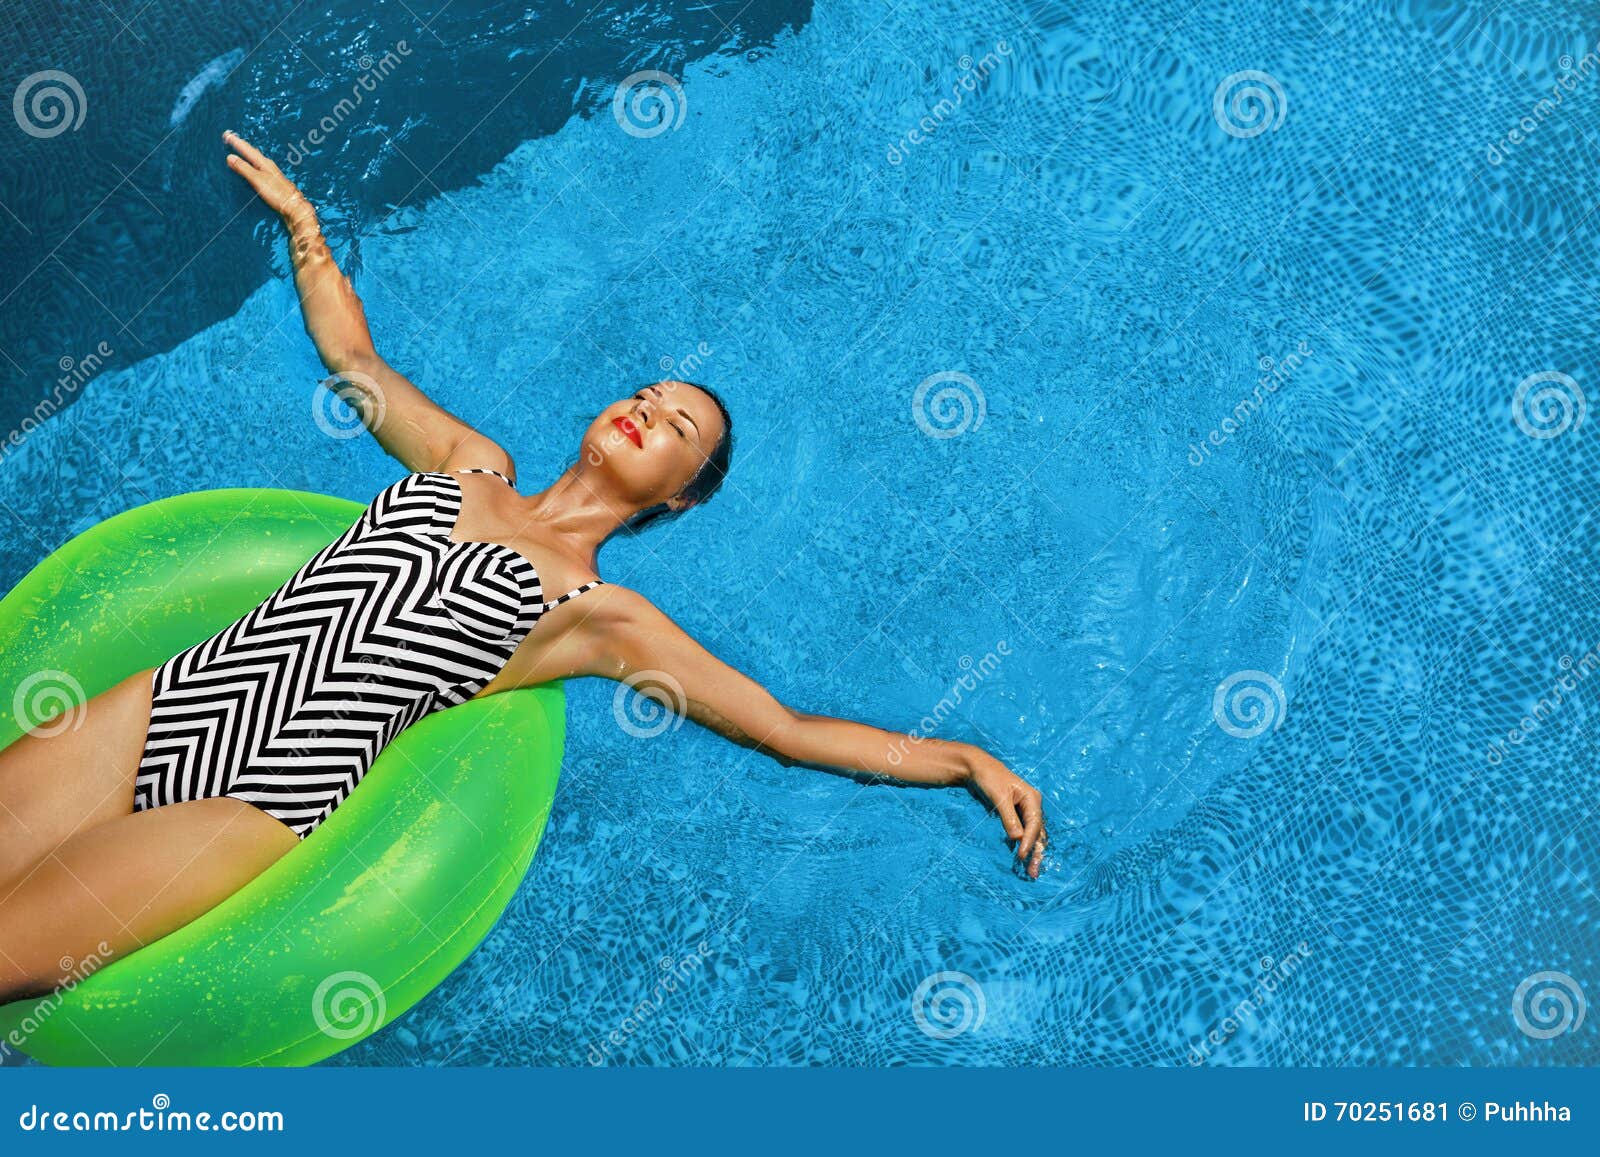 summer vacations. woman sunbathing, floating in swimming pool water